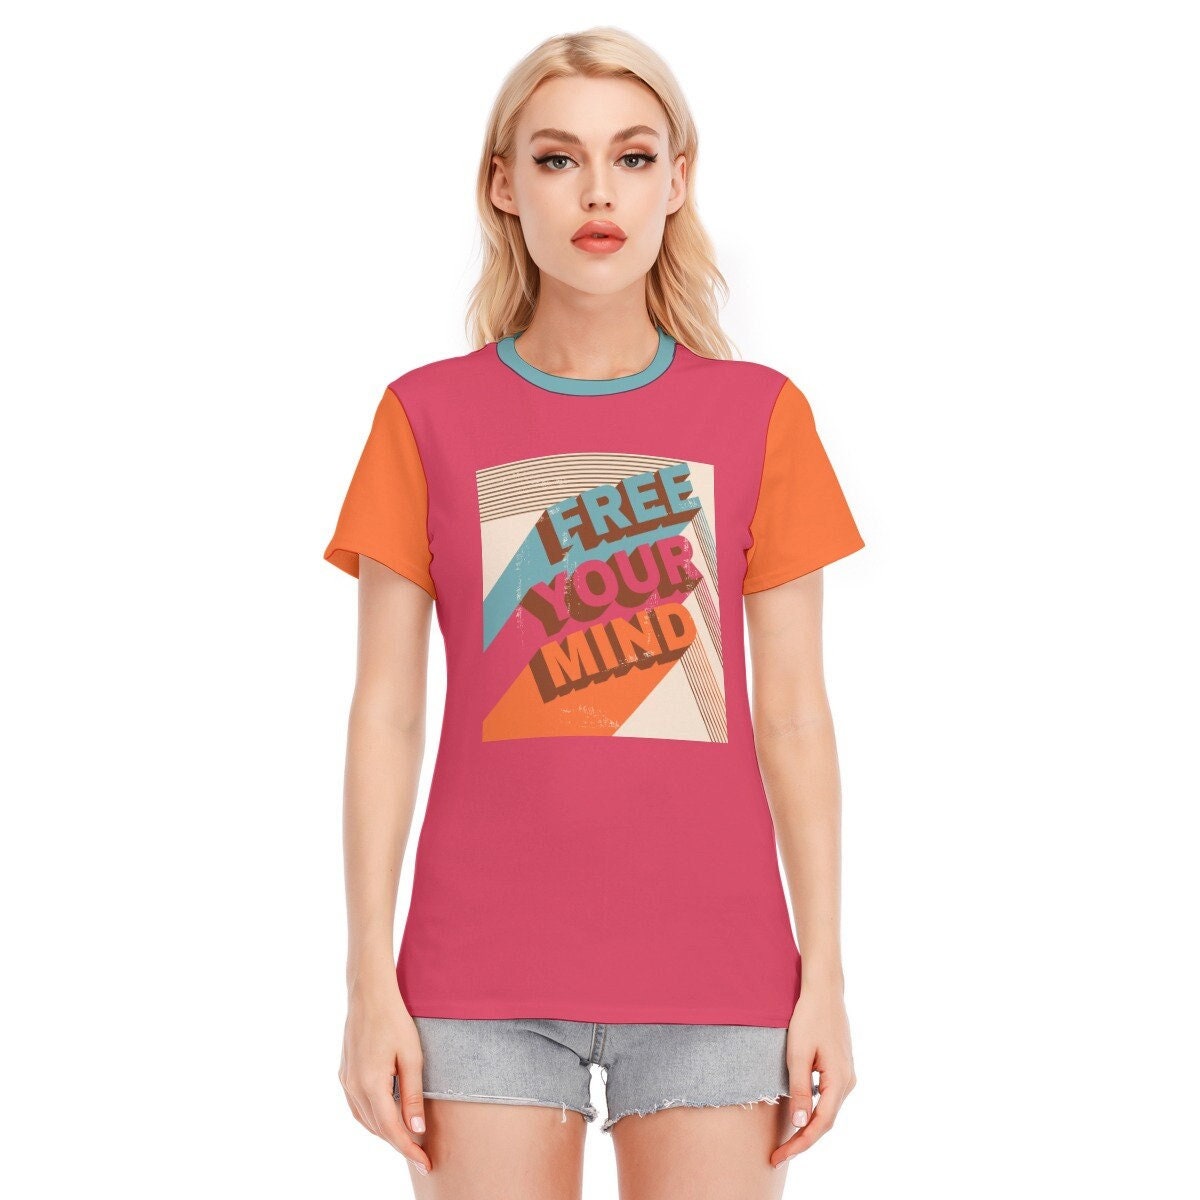 Retro-T-Shirt, T-Shirts mit Wörtern, Vintage-T-Shirt mit Wörtern, rosa T-Shirt mit Wörtern, Hippie-T-Shirt für Damen, T-Shirt im Vintage-Stil, fuchsiarosa T-Shirt